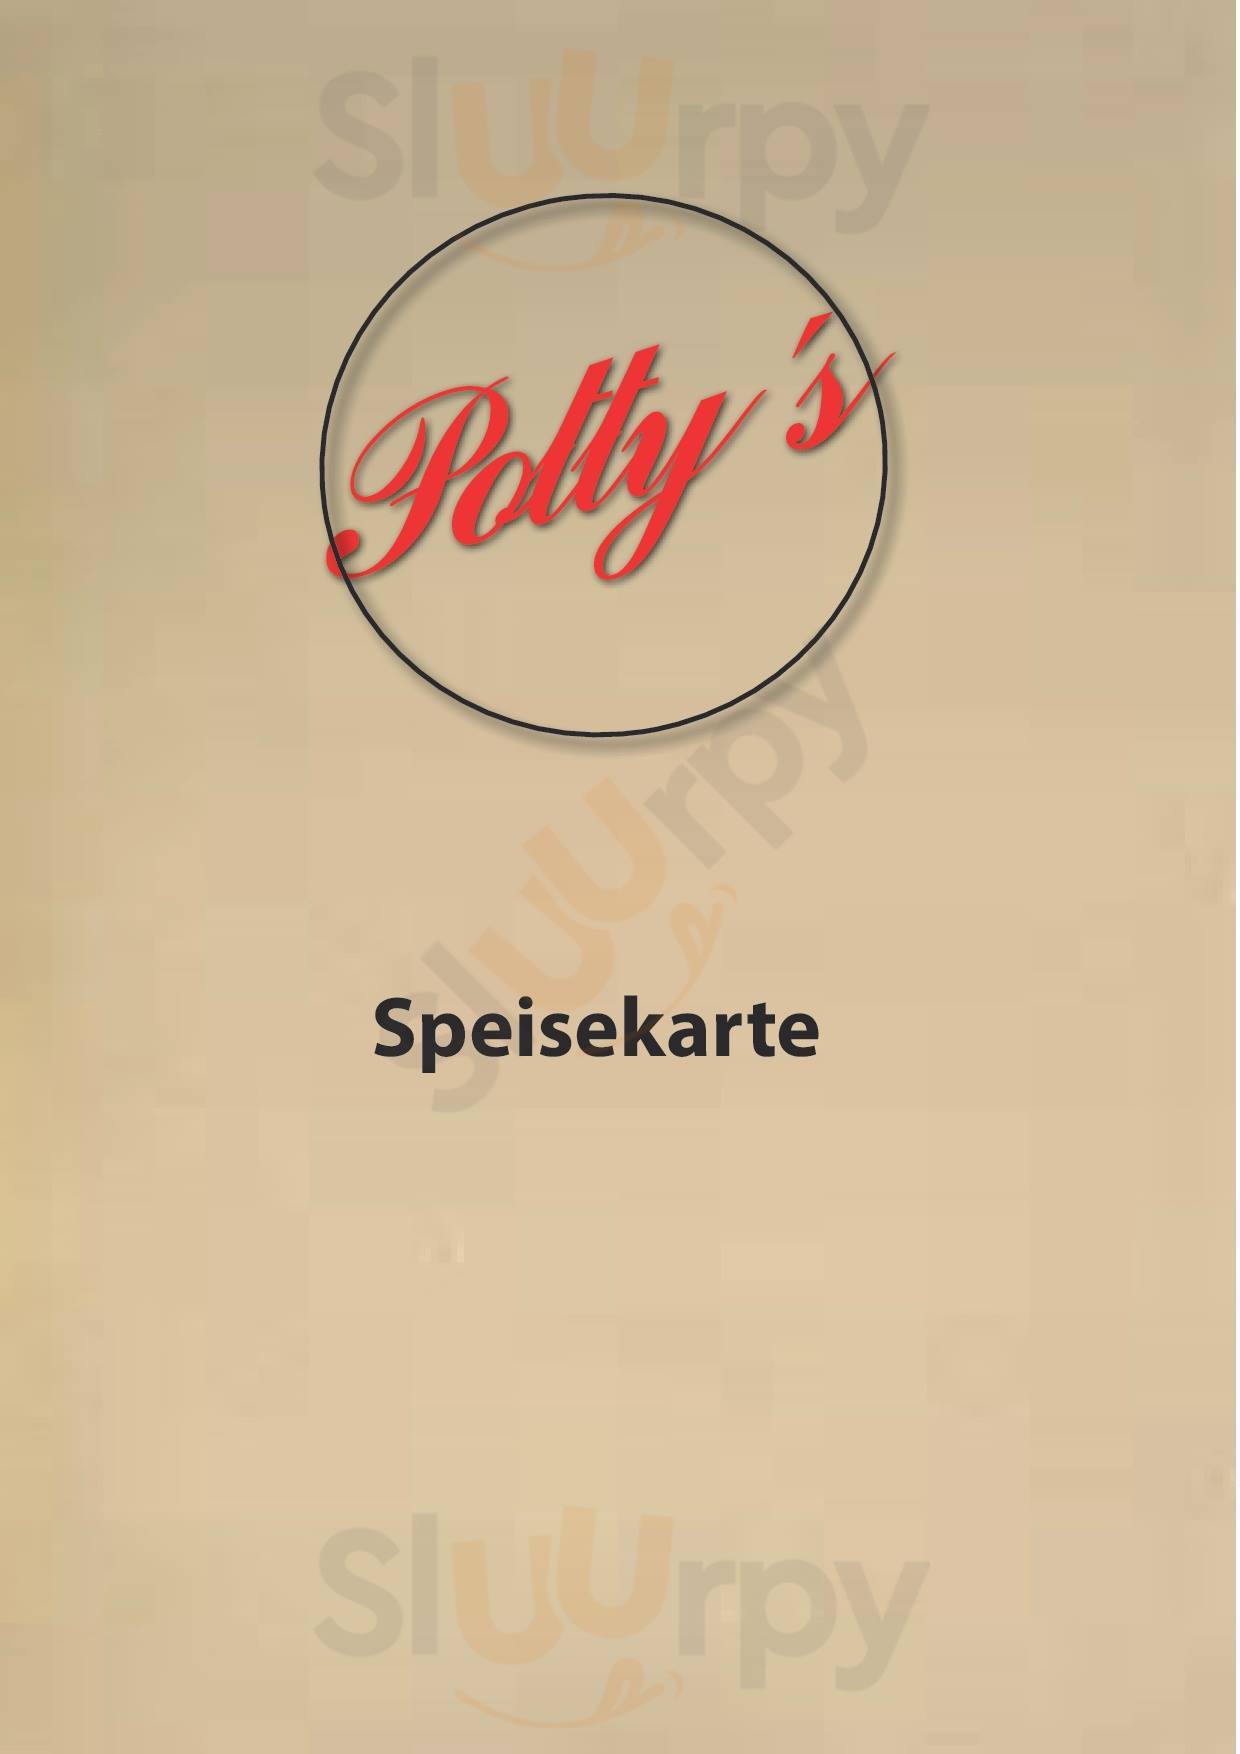 Potty's Restaurant Ludwigshafen Menu - 1